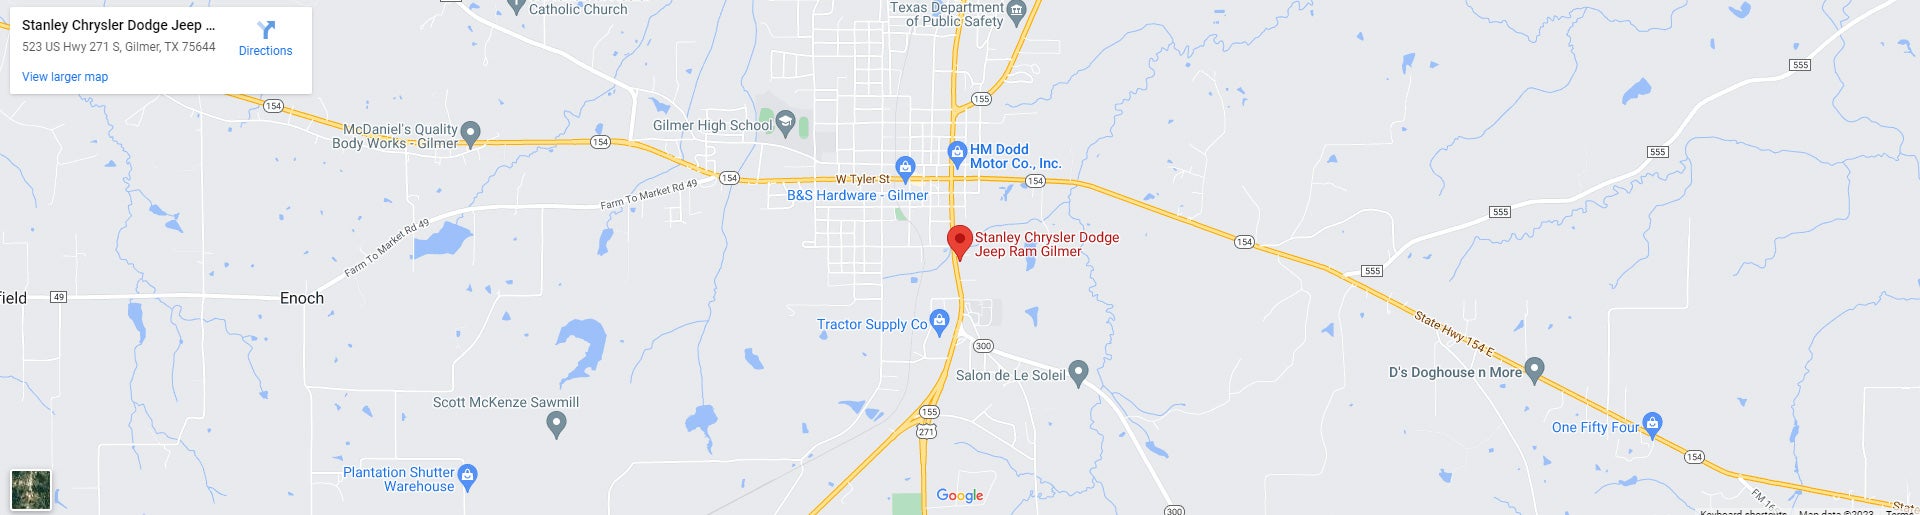 Stanley CDJR Gilmer location Google Maps image